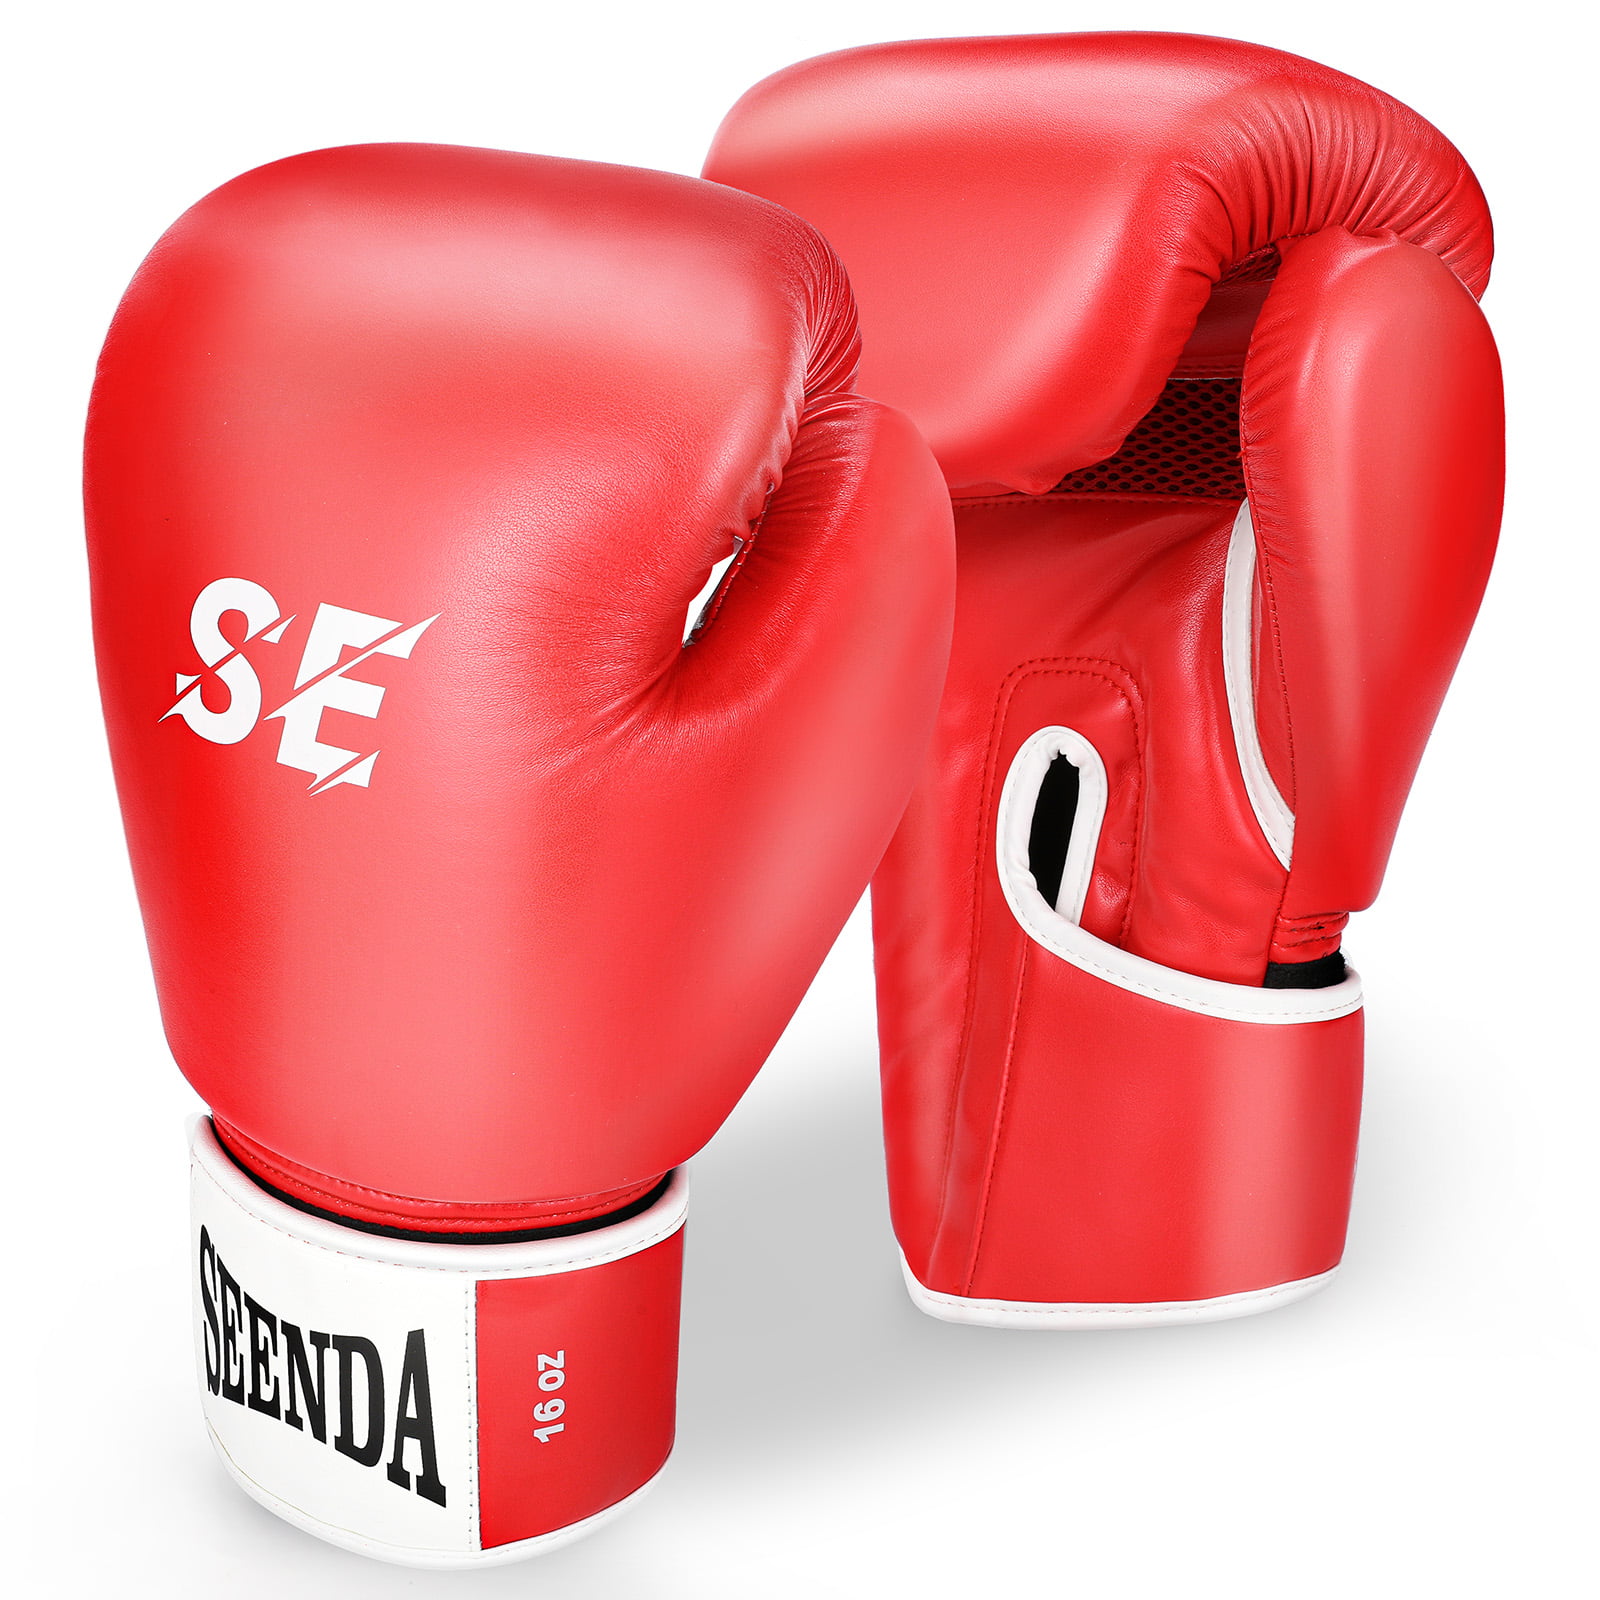 Ladies Boxing Gloves Sparring Punch Bag Training Muay Thai Kickboxing Red Shine 